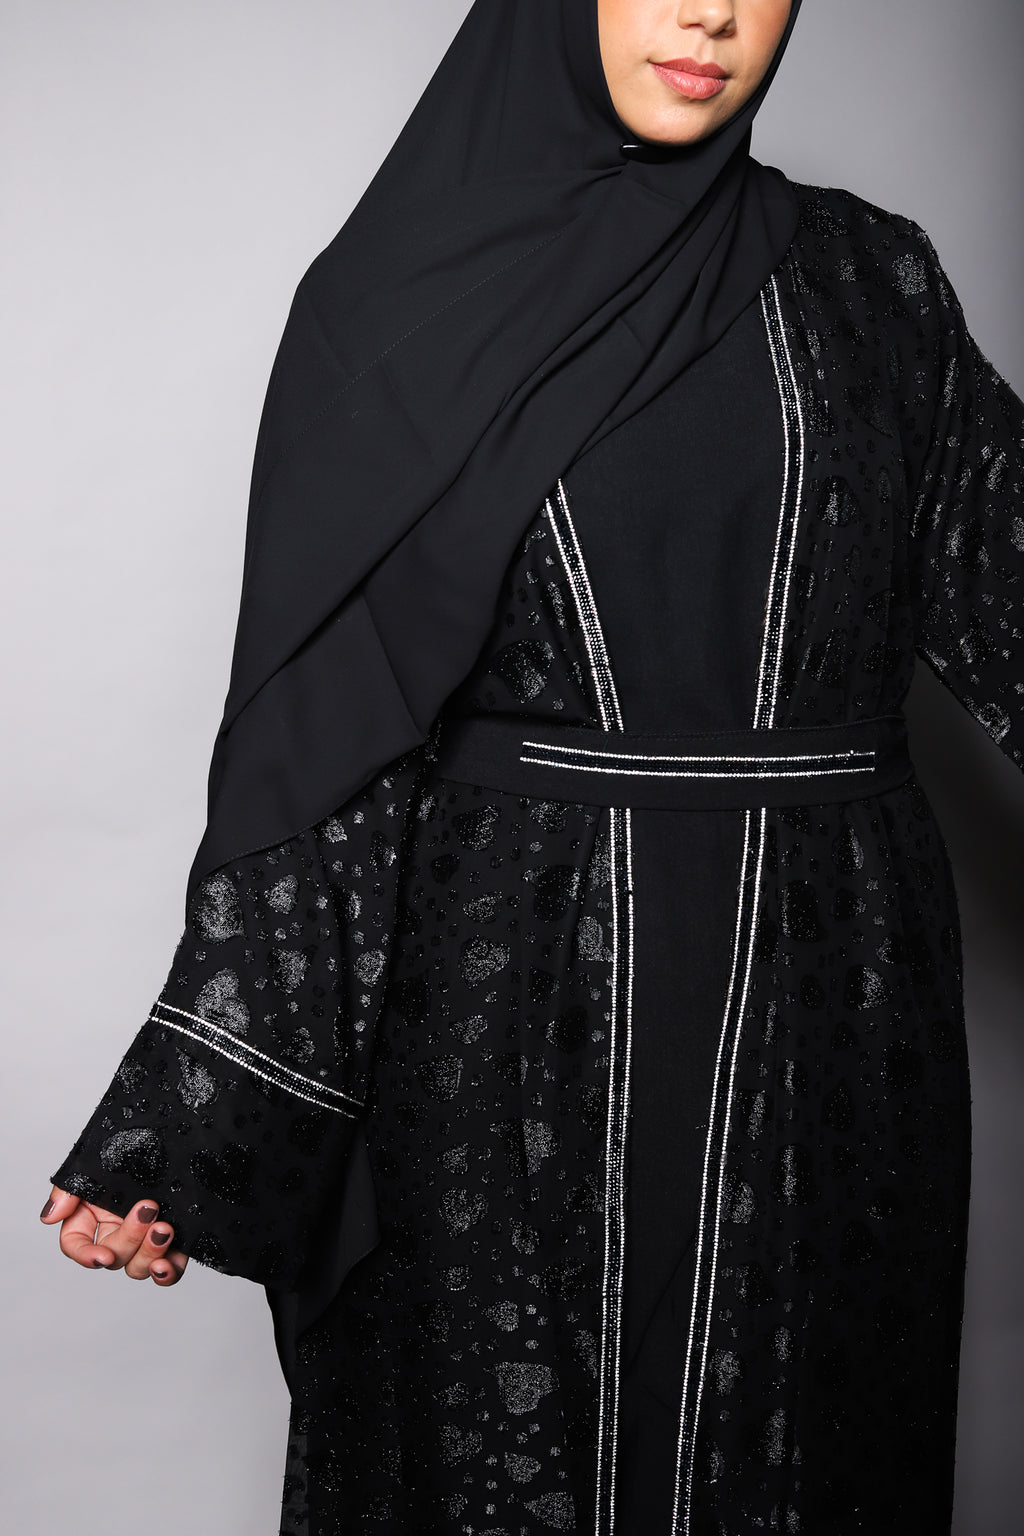 Amour Sheer Black Open Abaya